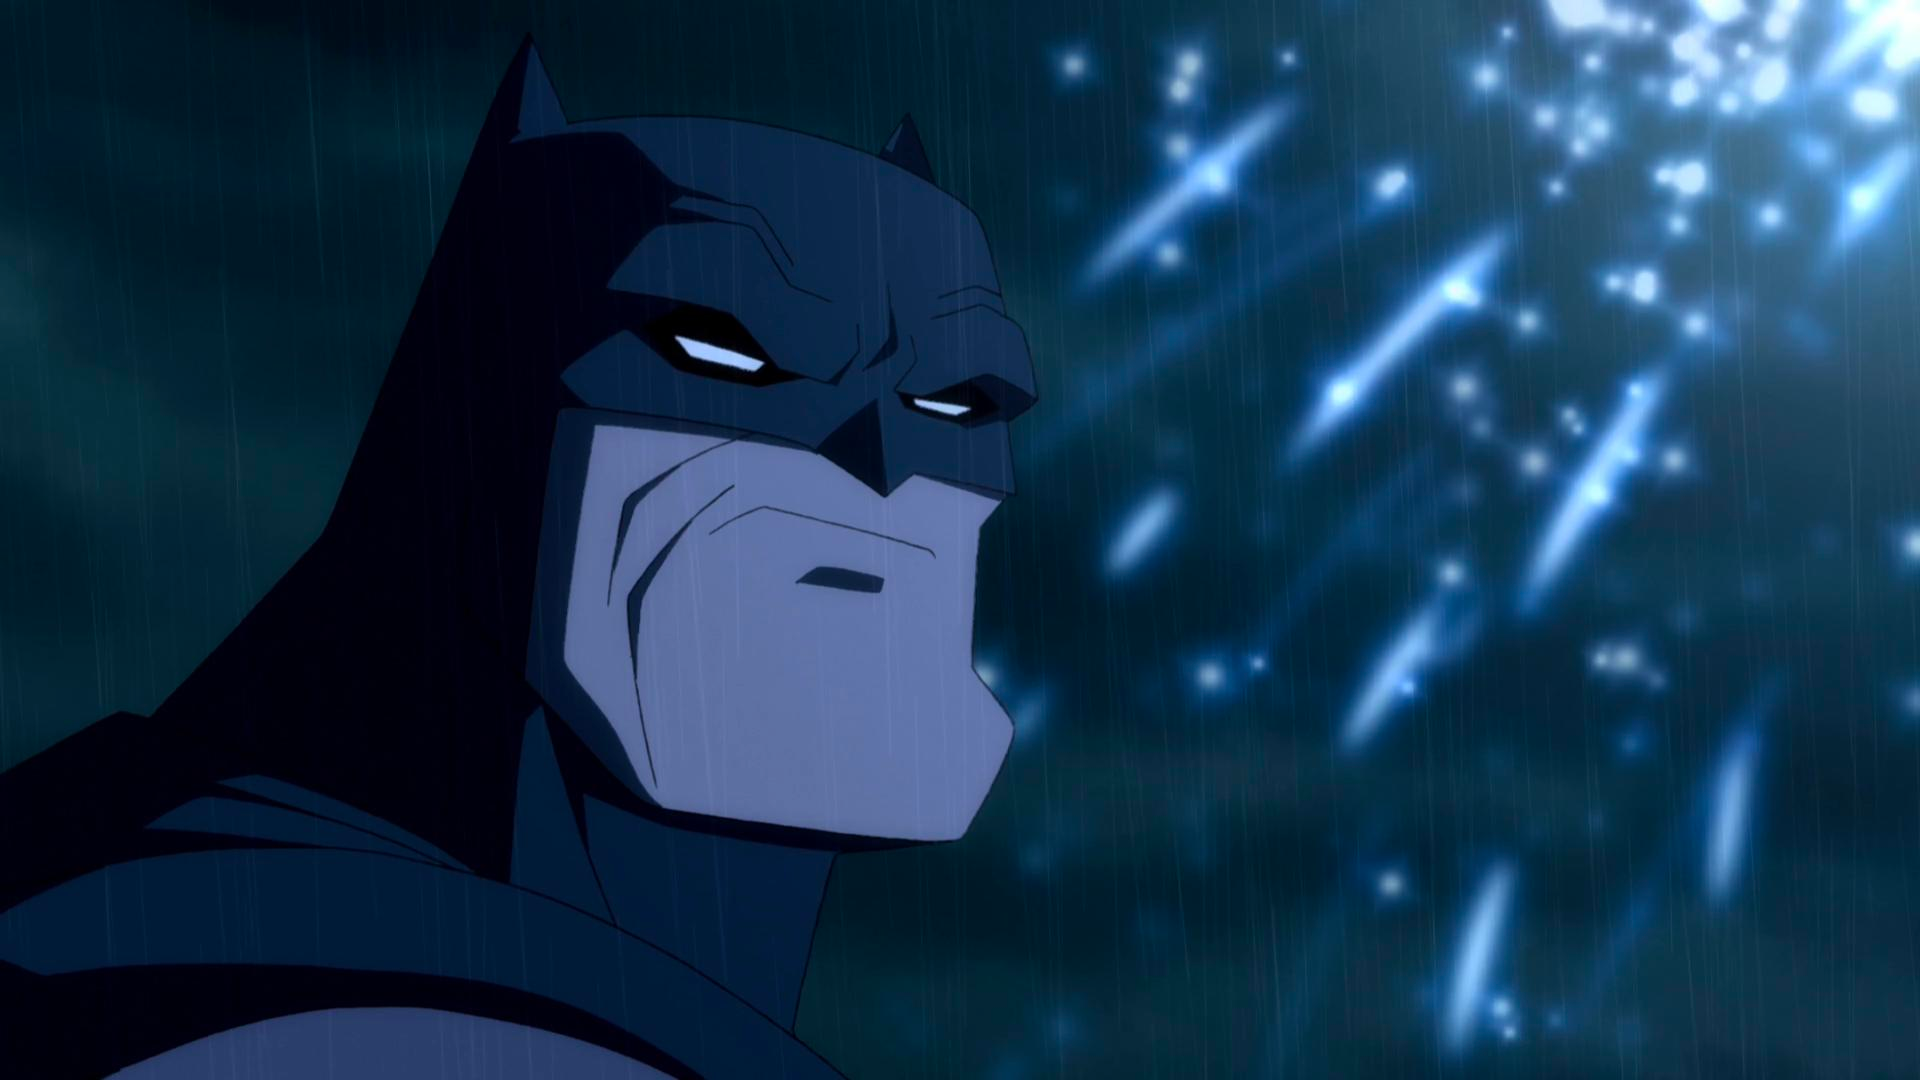 Batman looks angry at night in Dark Knight Returns.